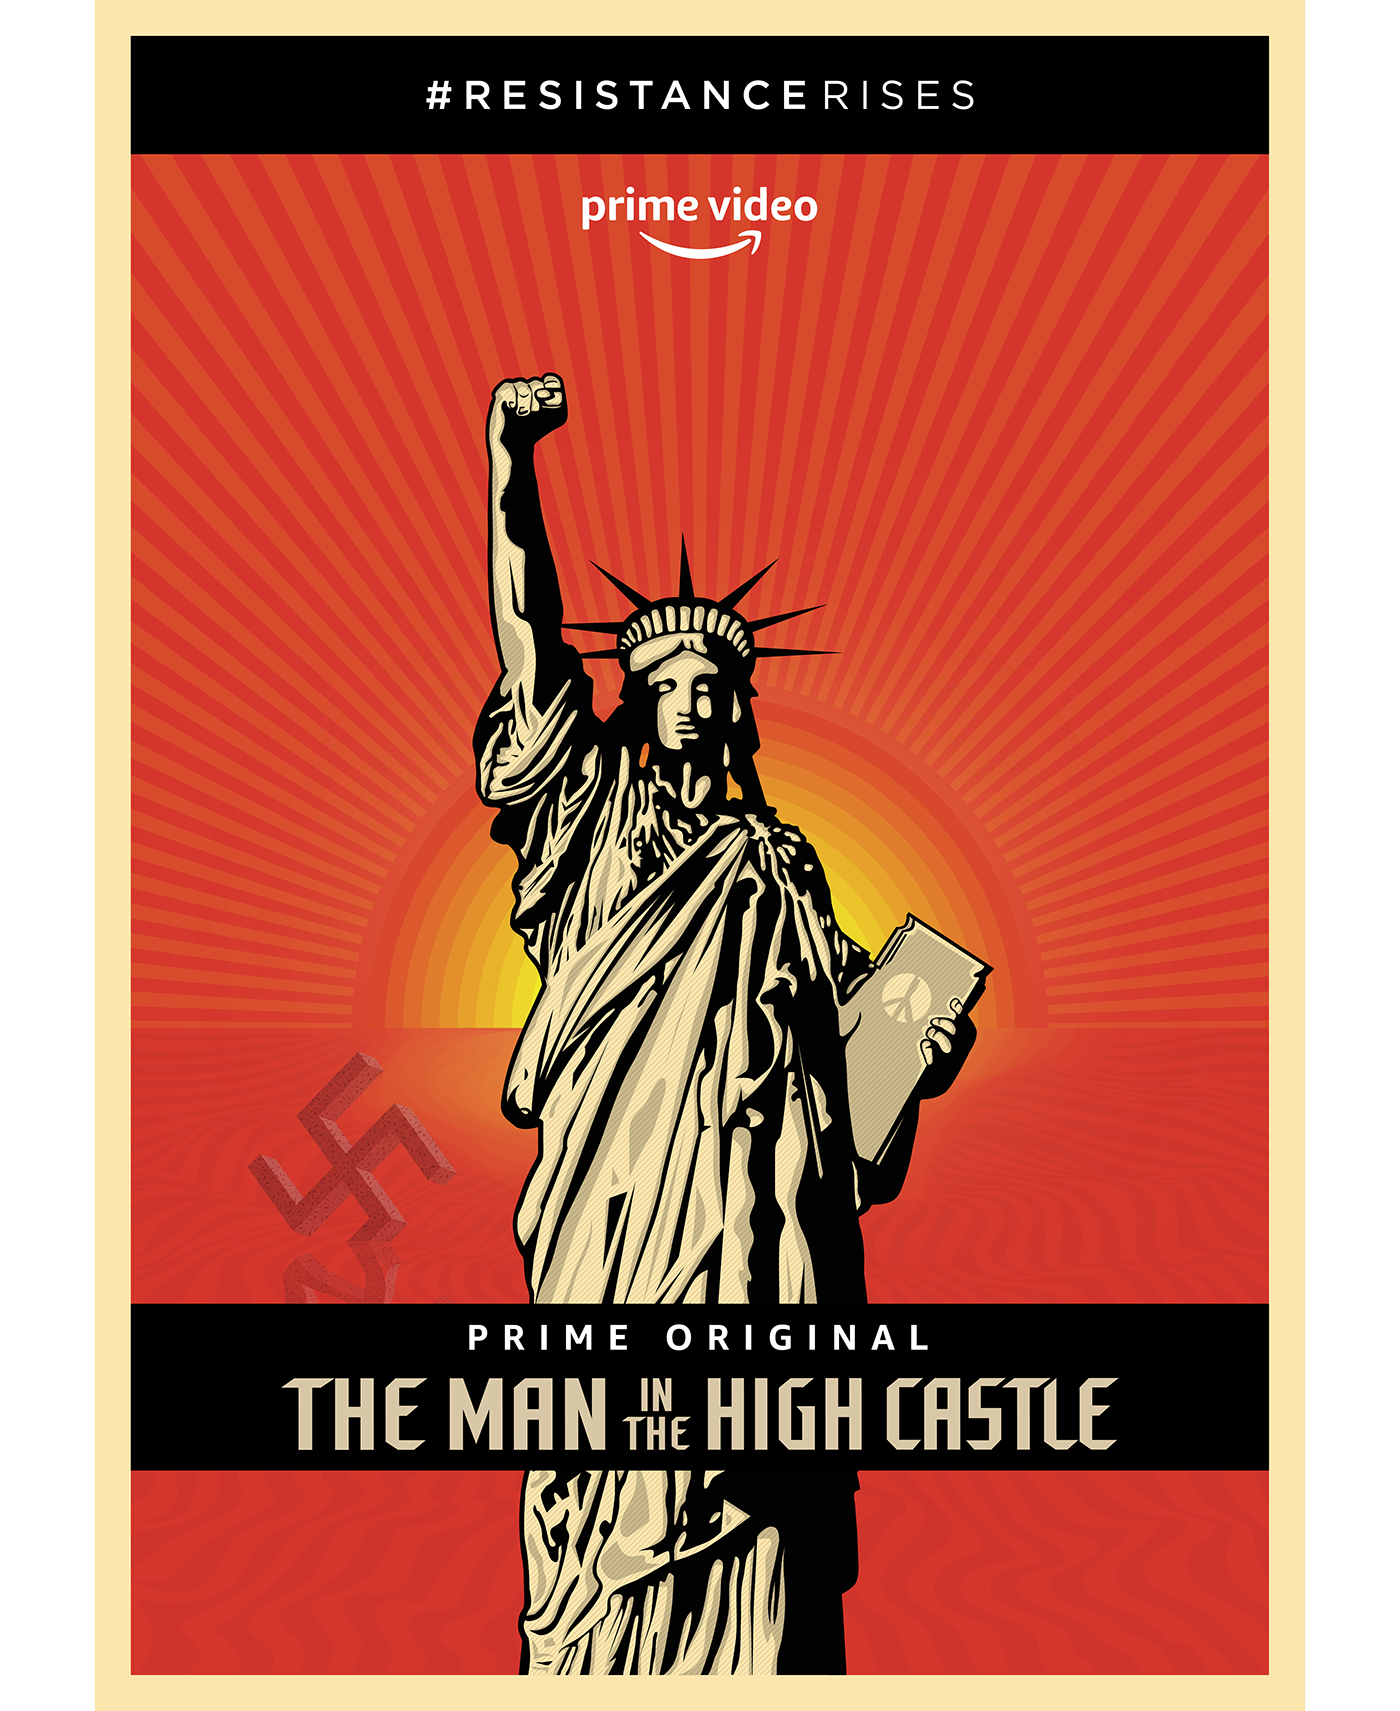 themaninthehighcastle season 3 amazon prime talenthouse poster design Poster Design vector ILLUSTRATION  Illustrator